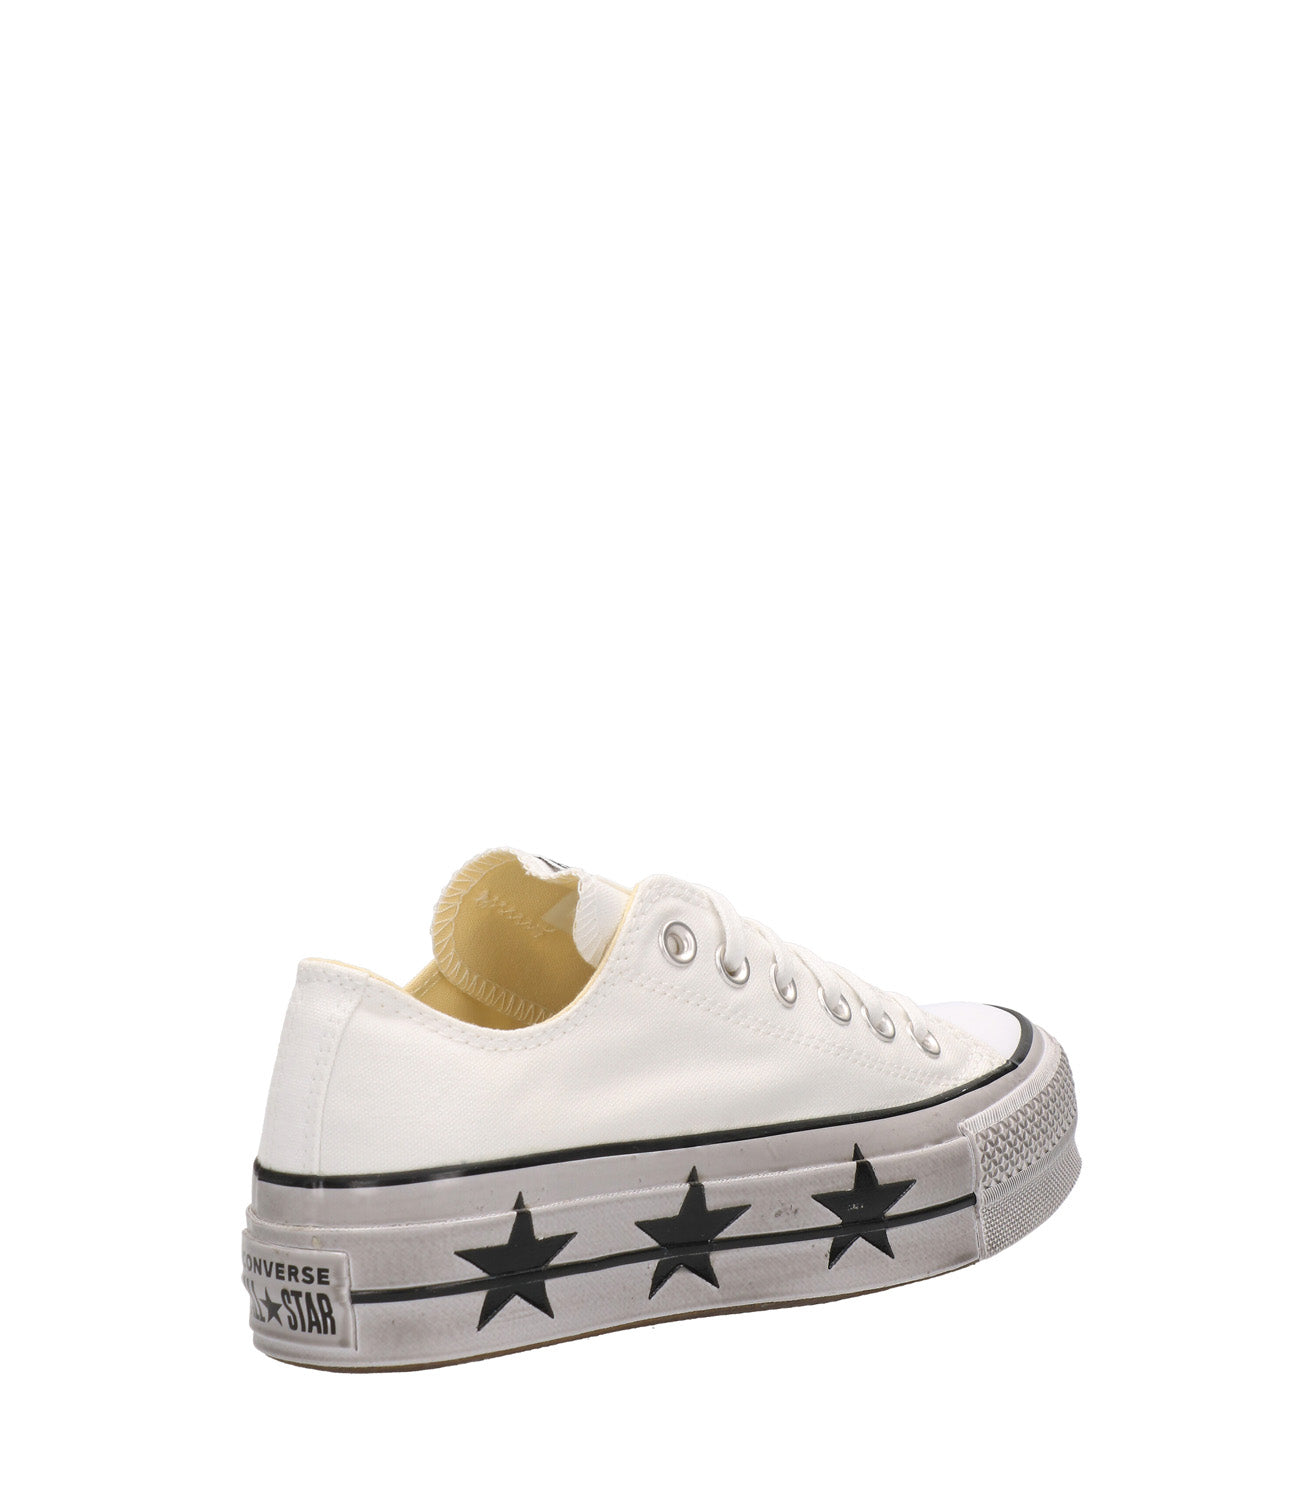 Converse Chuck Taylor All Star Platform Ltd Ox White Sneakers